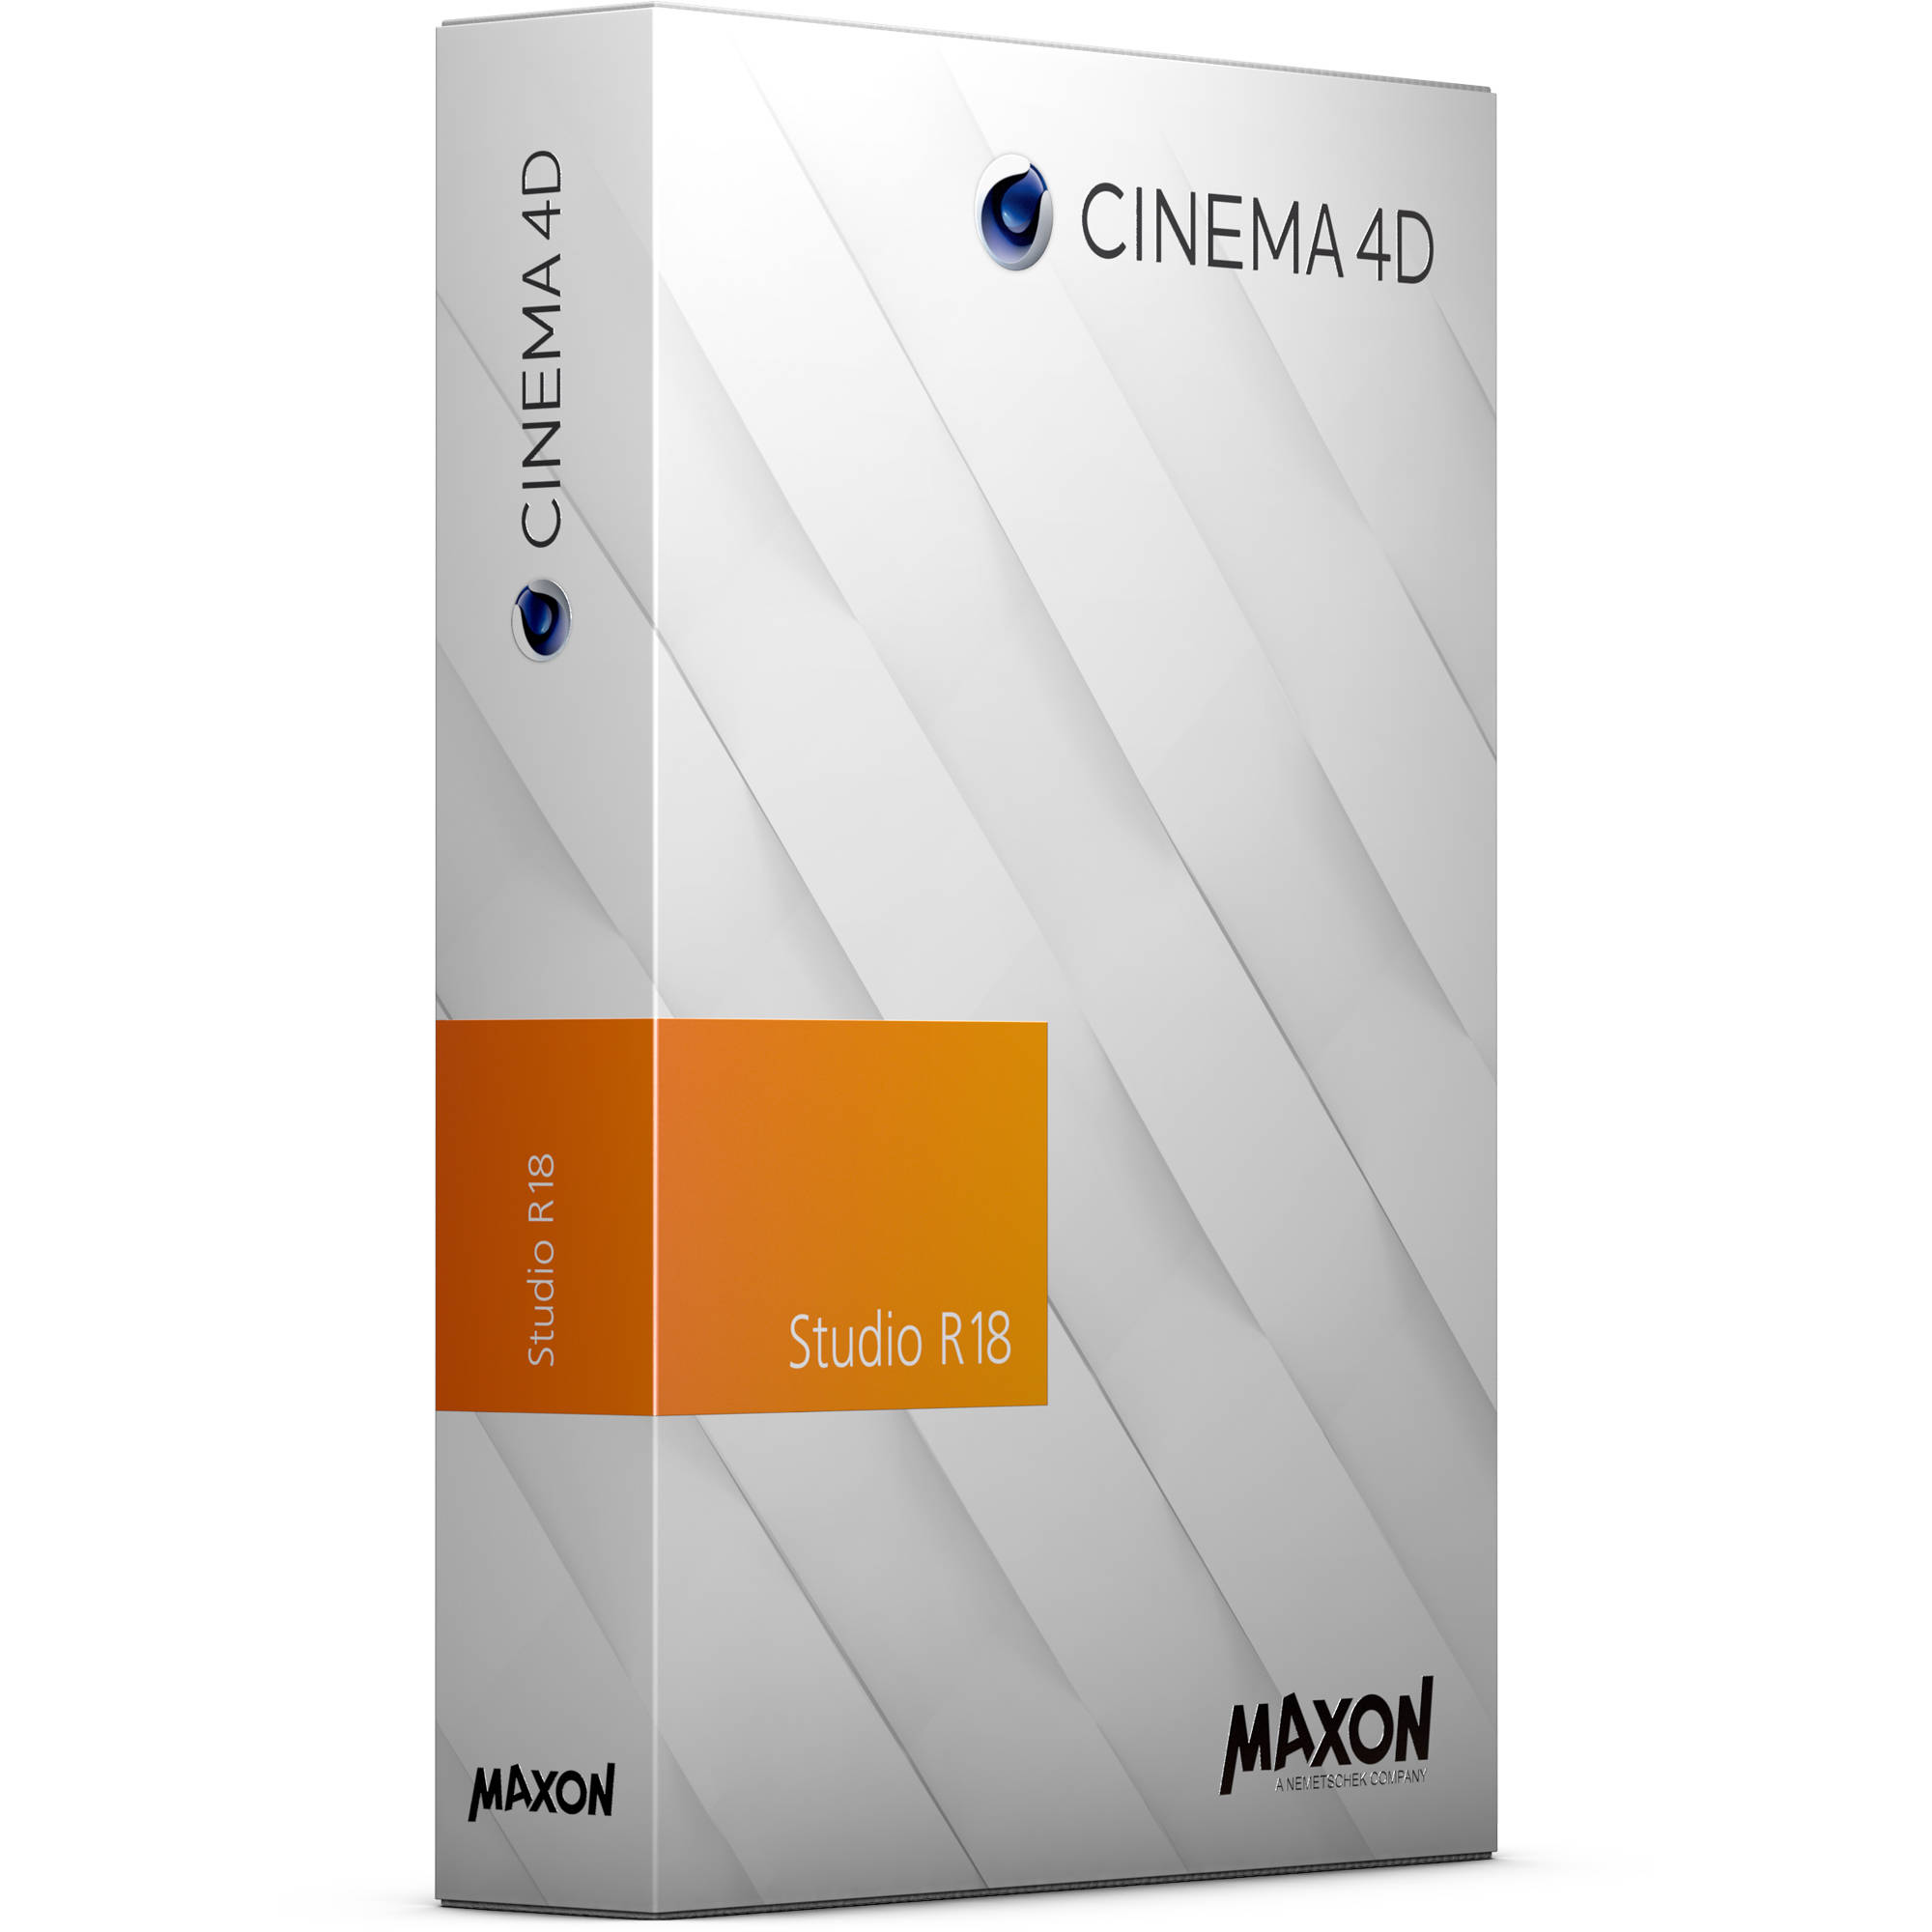 Buy Maxon Cinema 4D Studio R16 mac